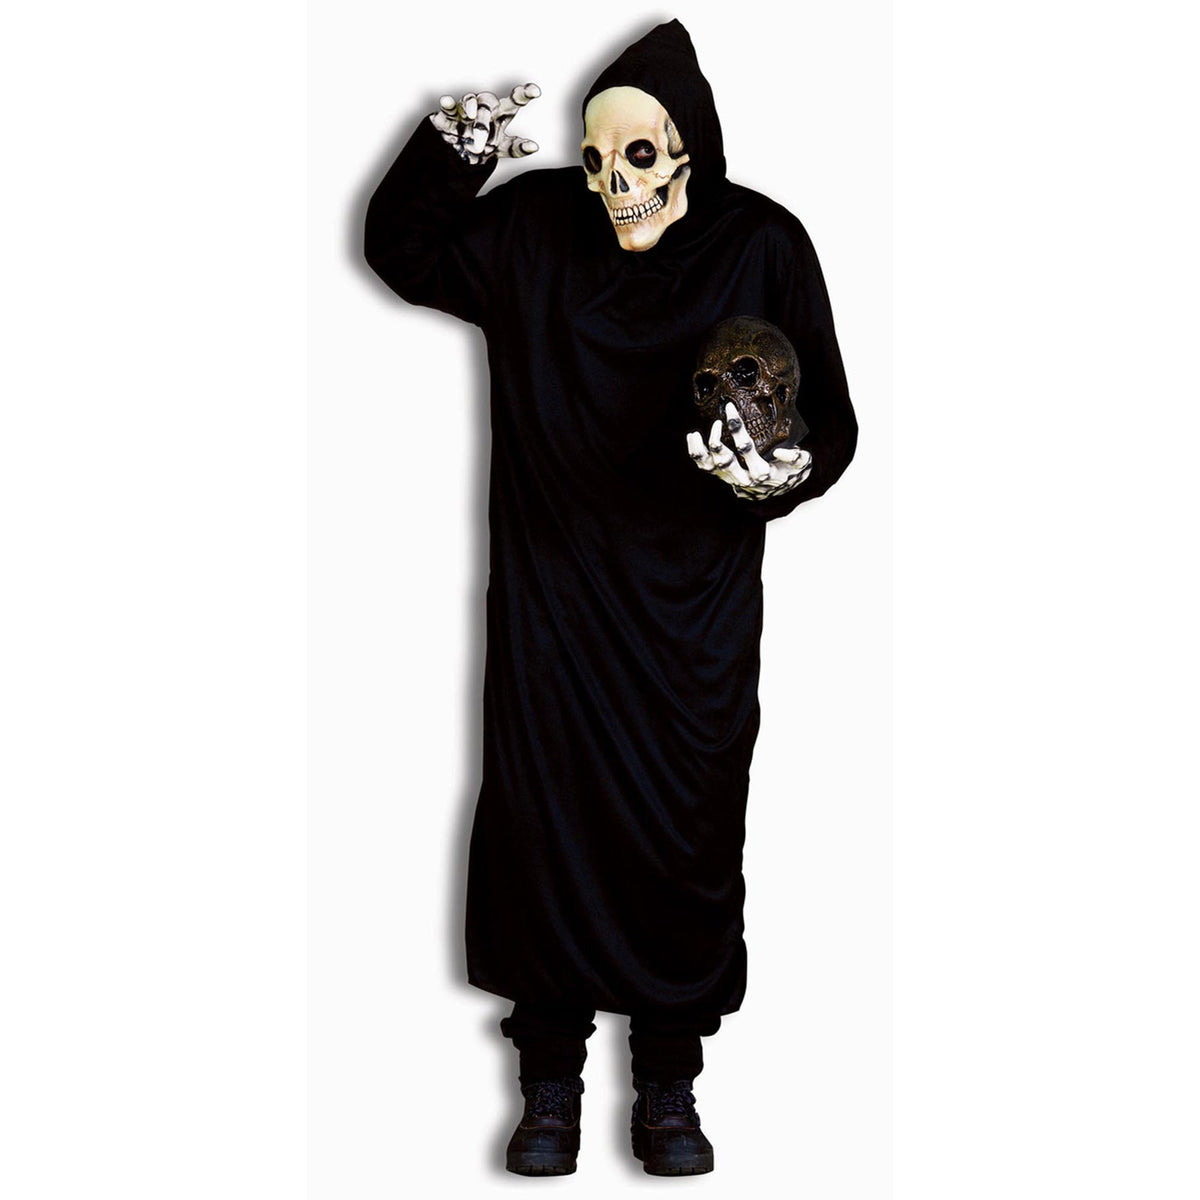 RUBIES II (Ruby Slipper Sales) Costumes Horror Black Robe Costume for Adults 721773515583